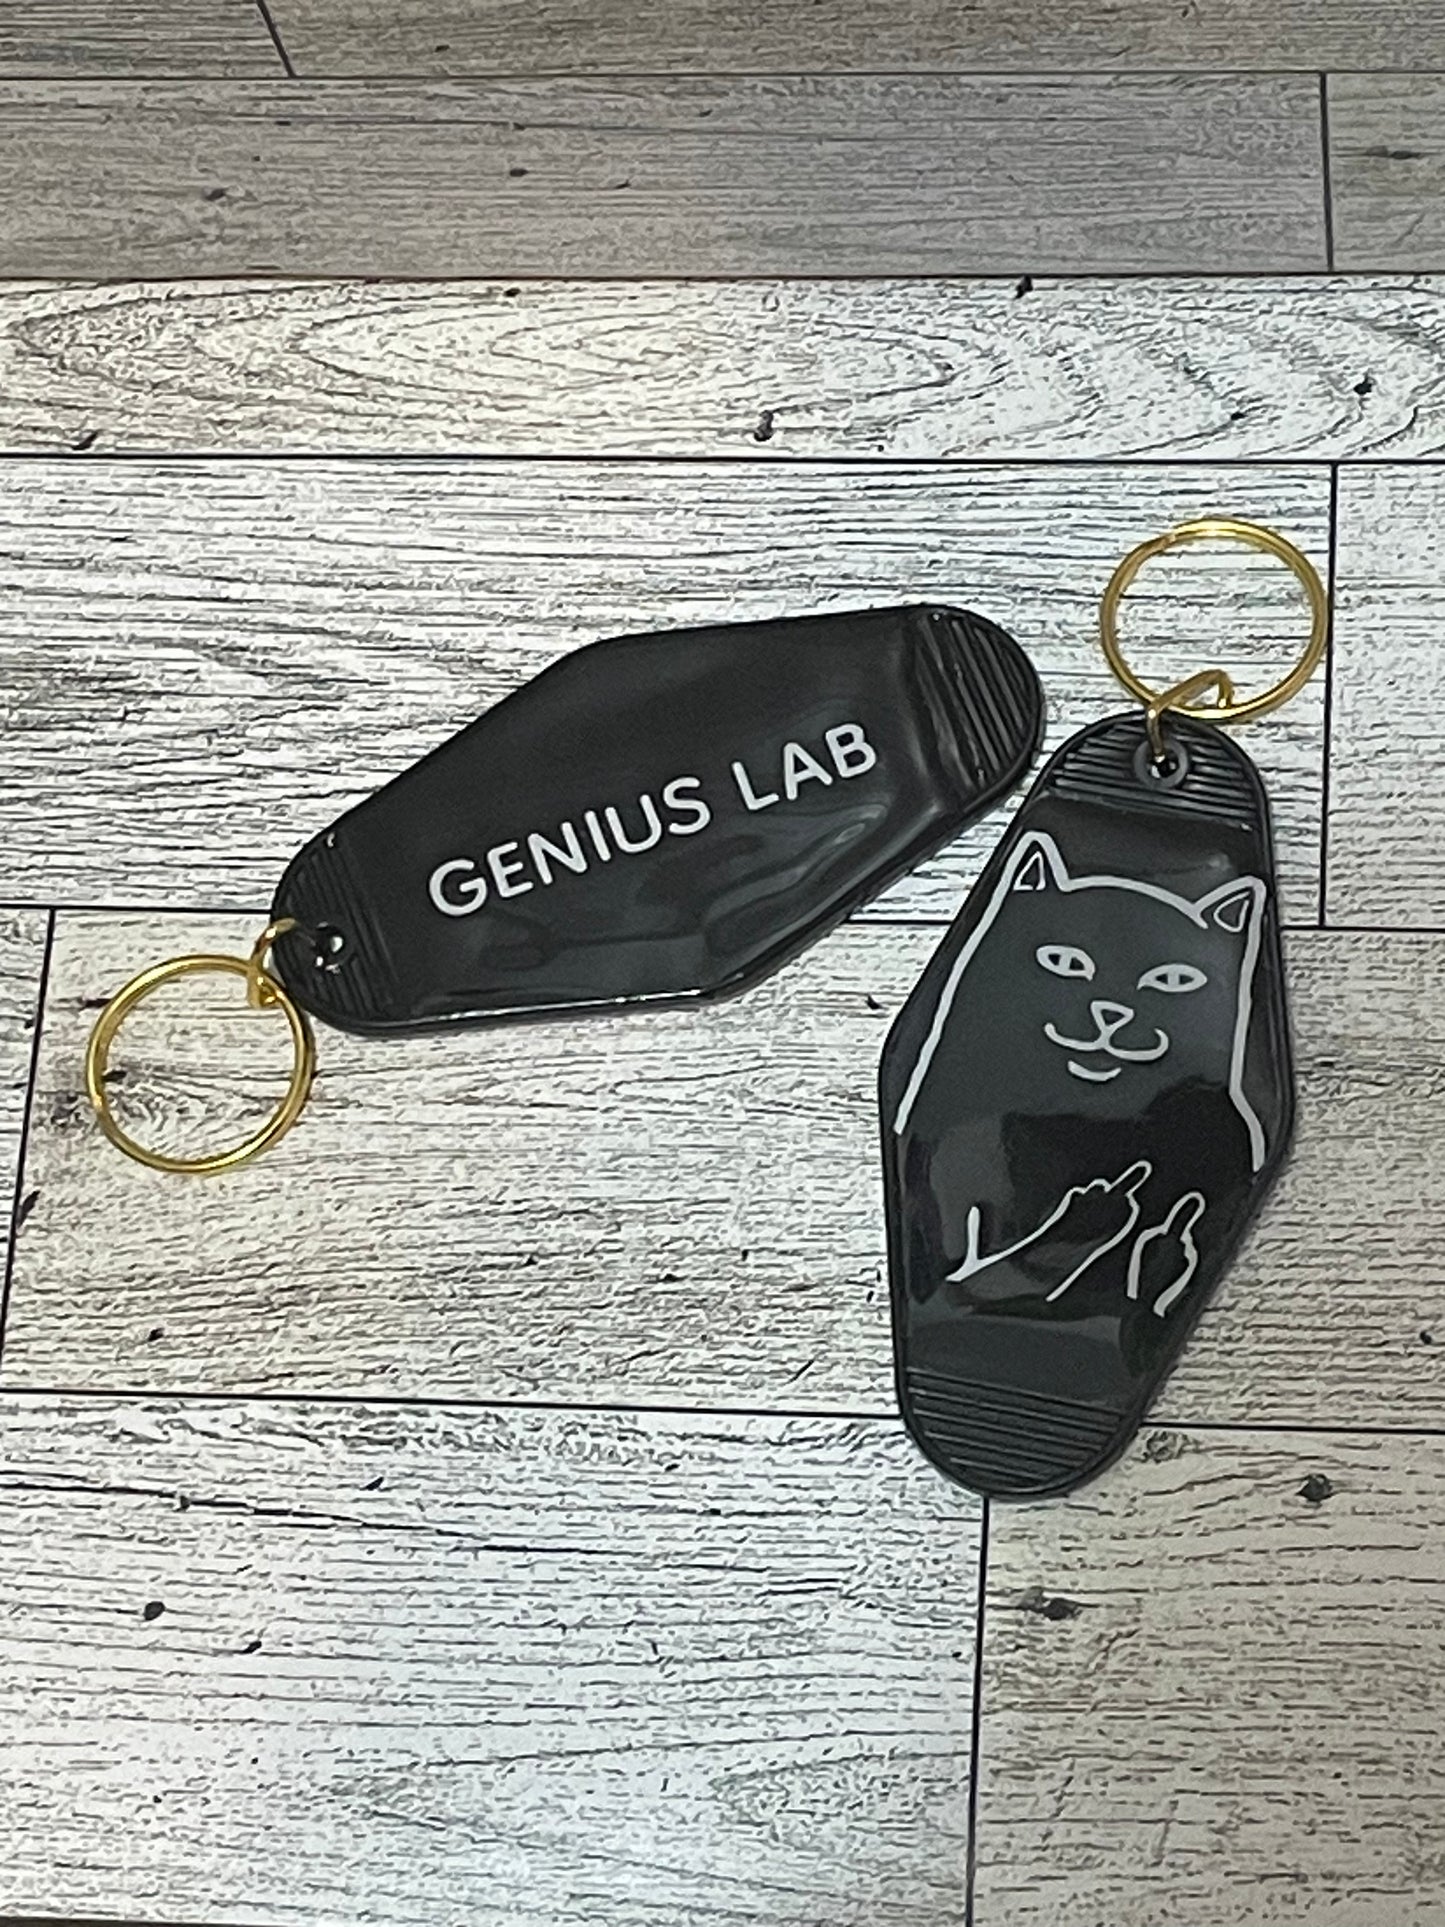 Genius Lab Keychain